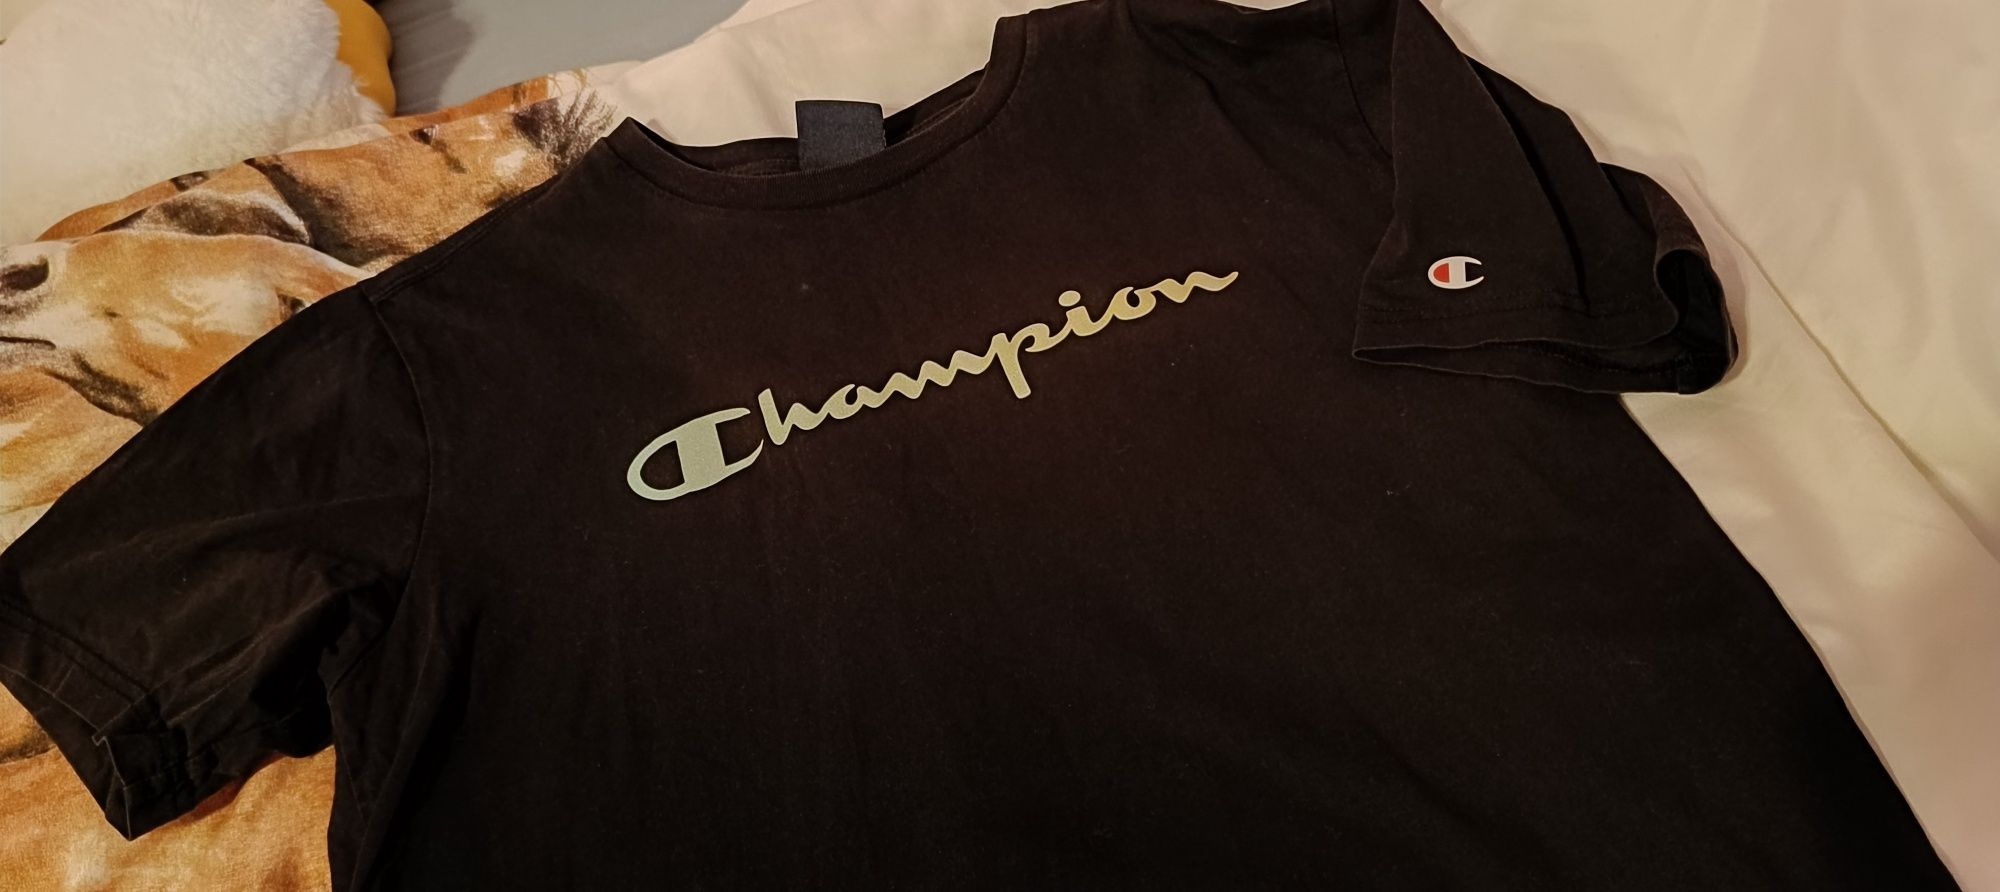 58. T-shirt champion